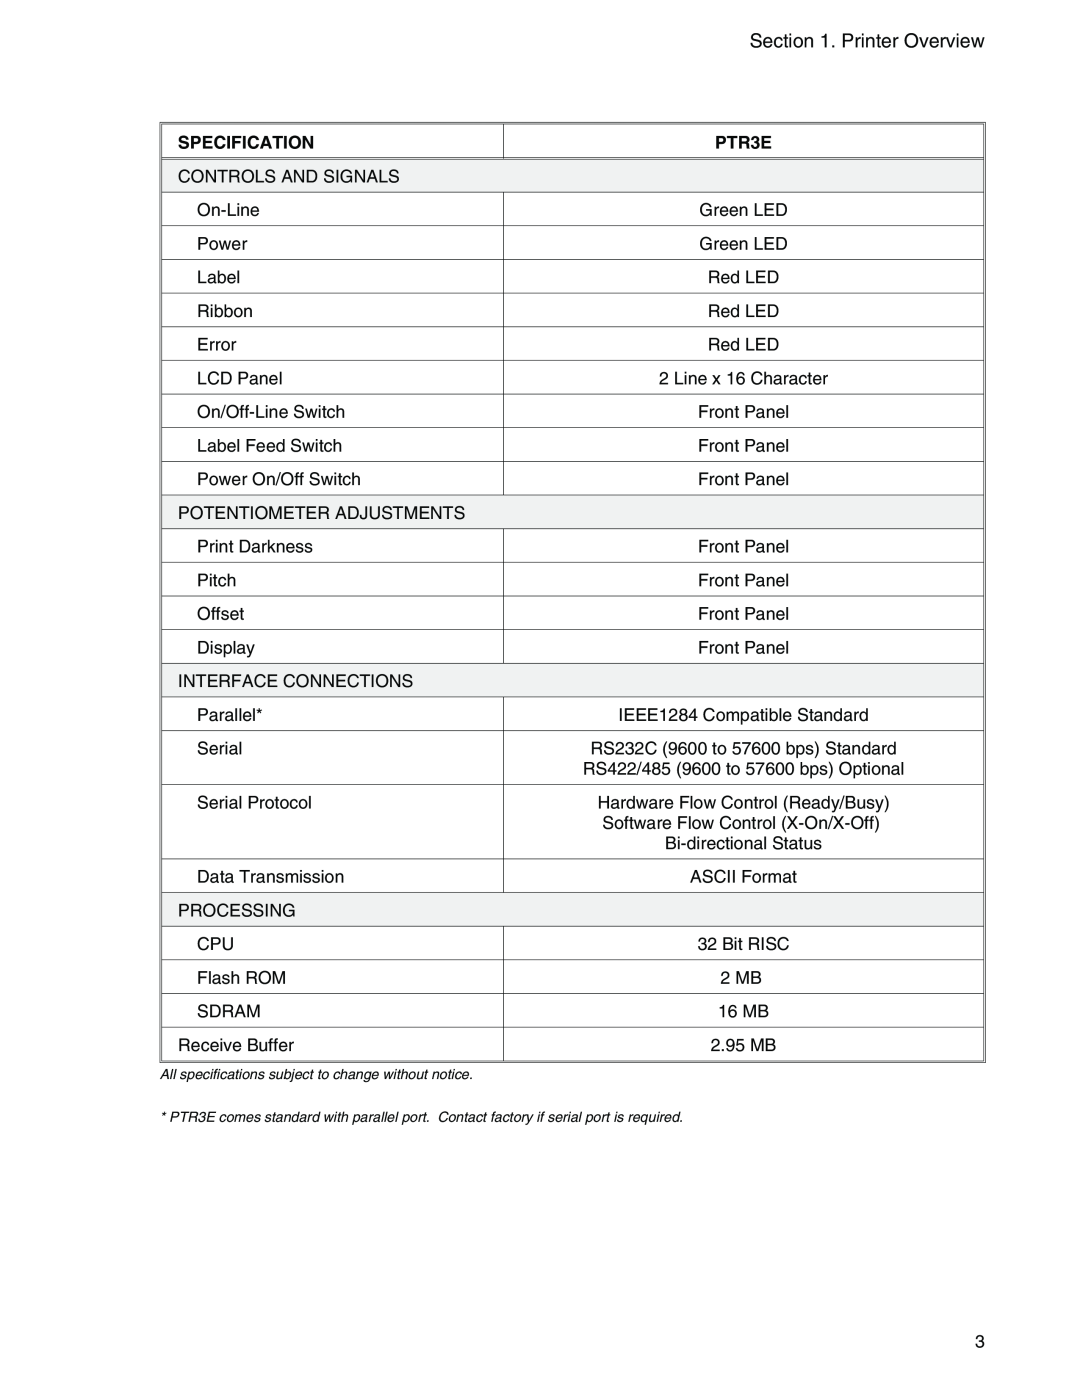 Panduit PTR3E manual Printer Overview, Specification 